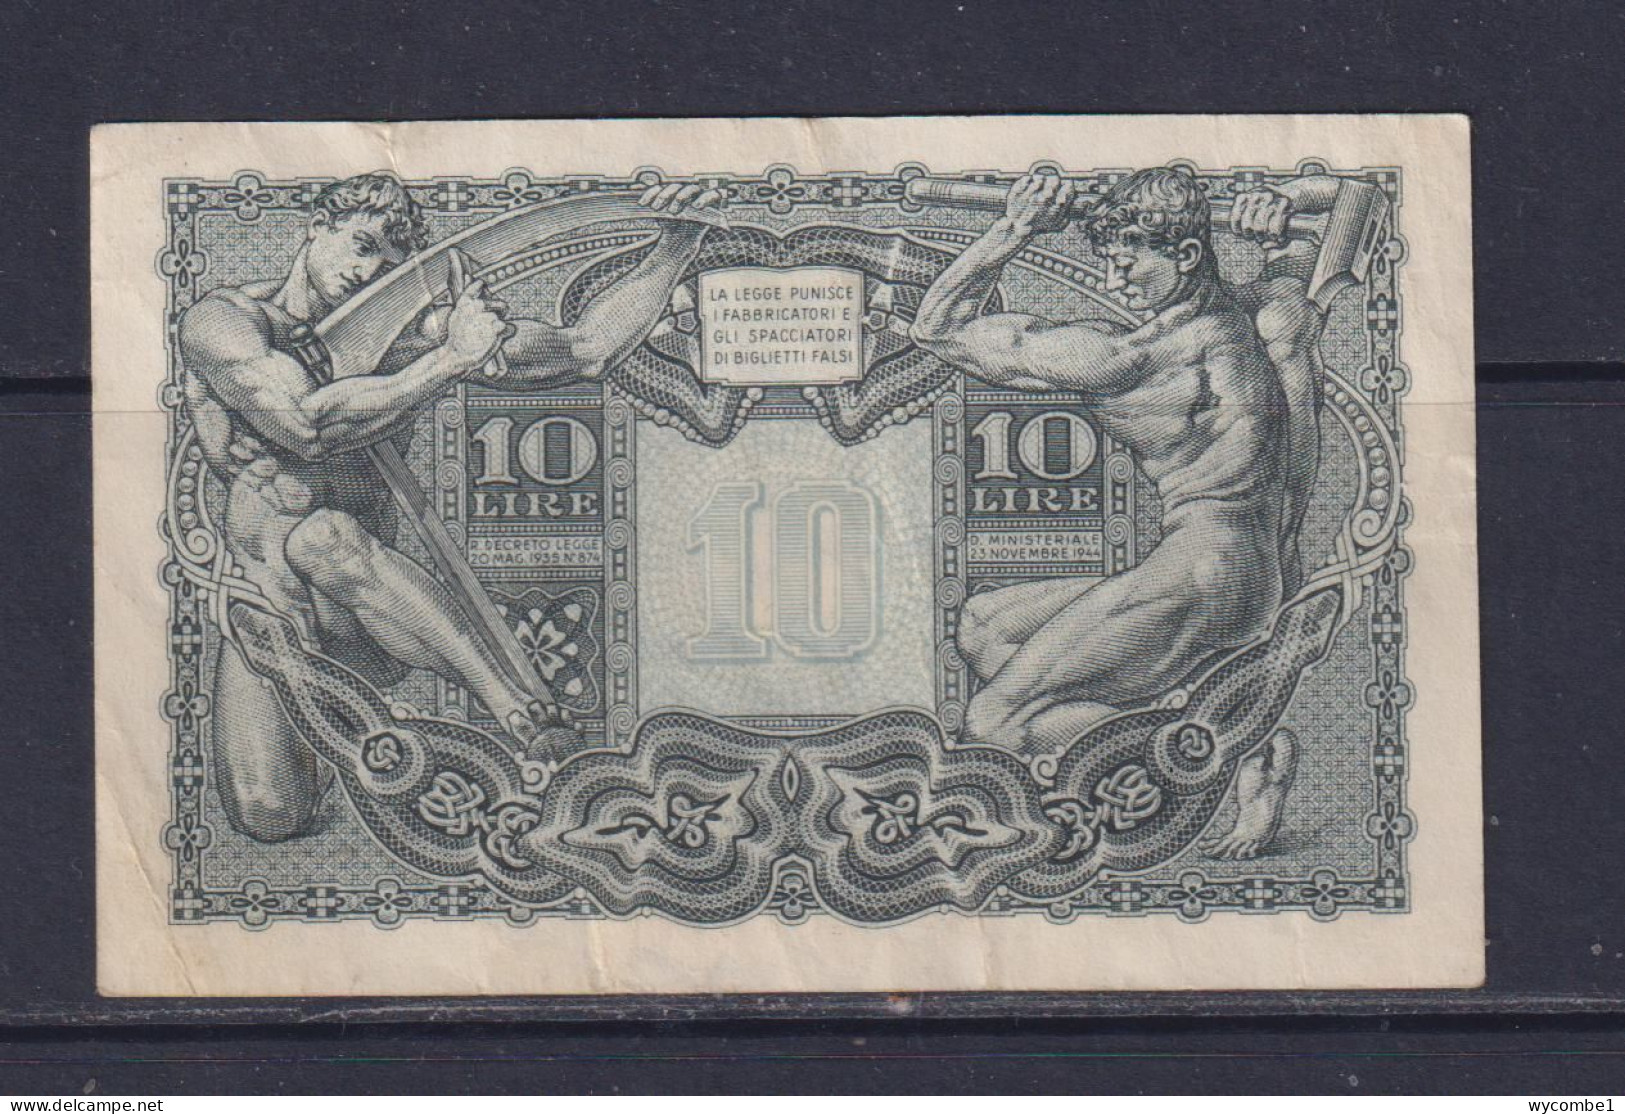 ITALY - 1944 10 Lira Circulated Banknote - Italia – 10 Lire